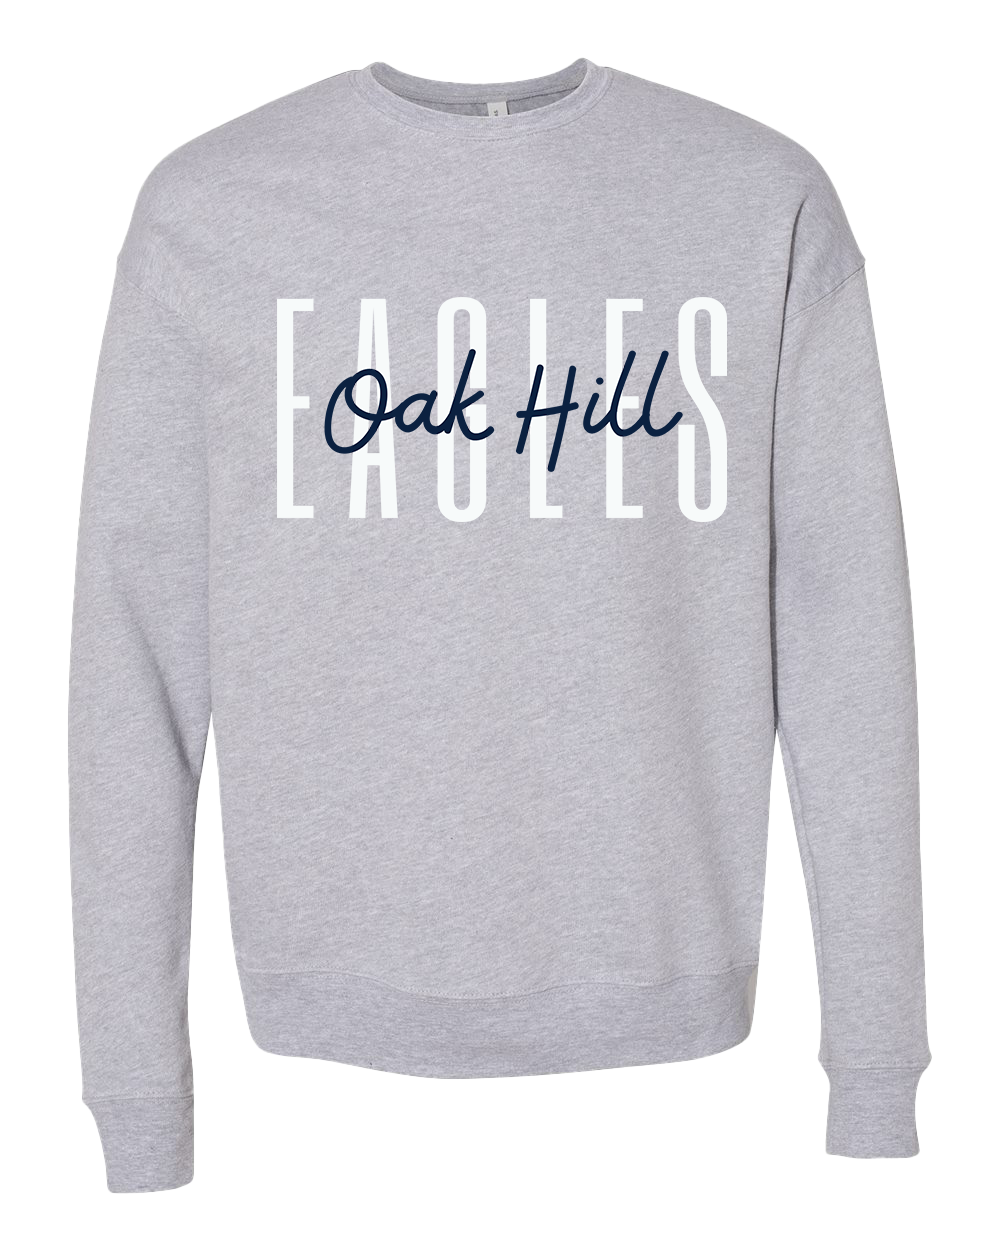 Oak Hill Eagles Tall Crew Sweatshirt - Heather Grey